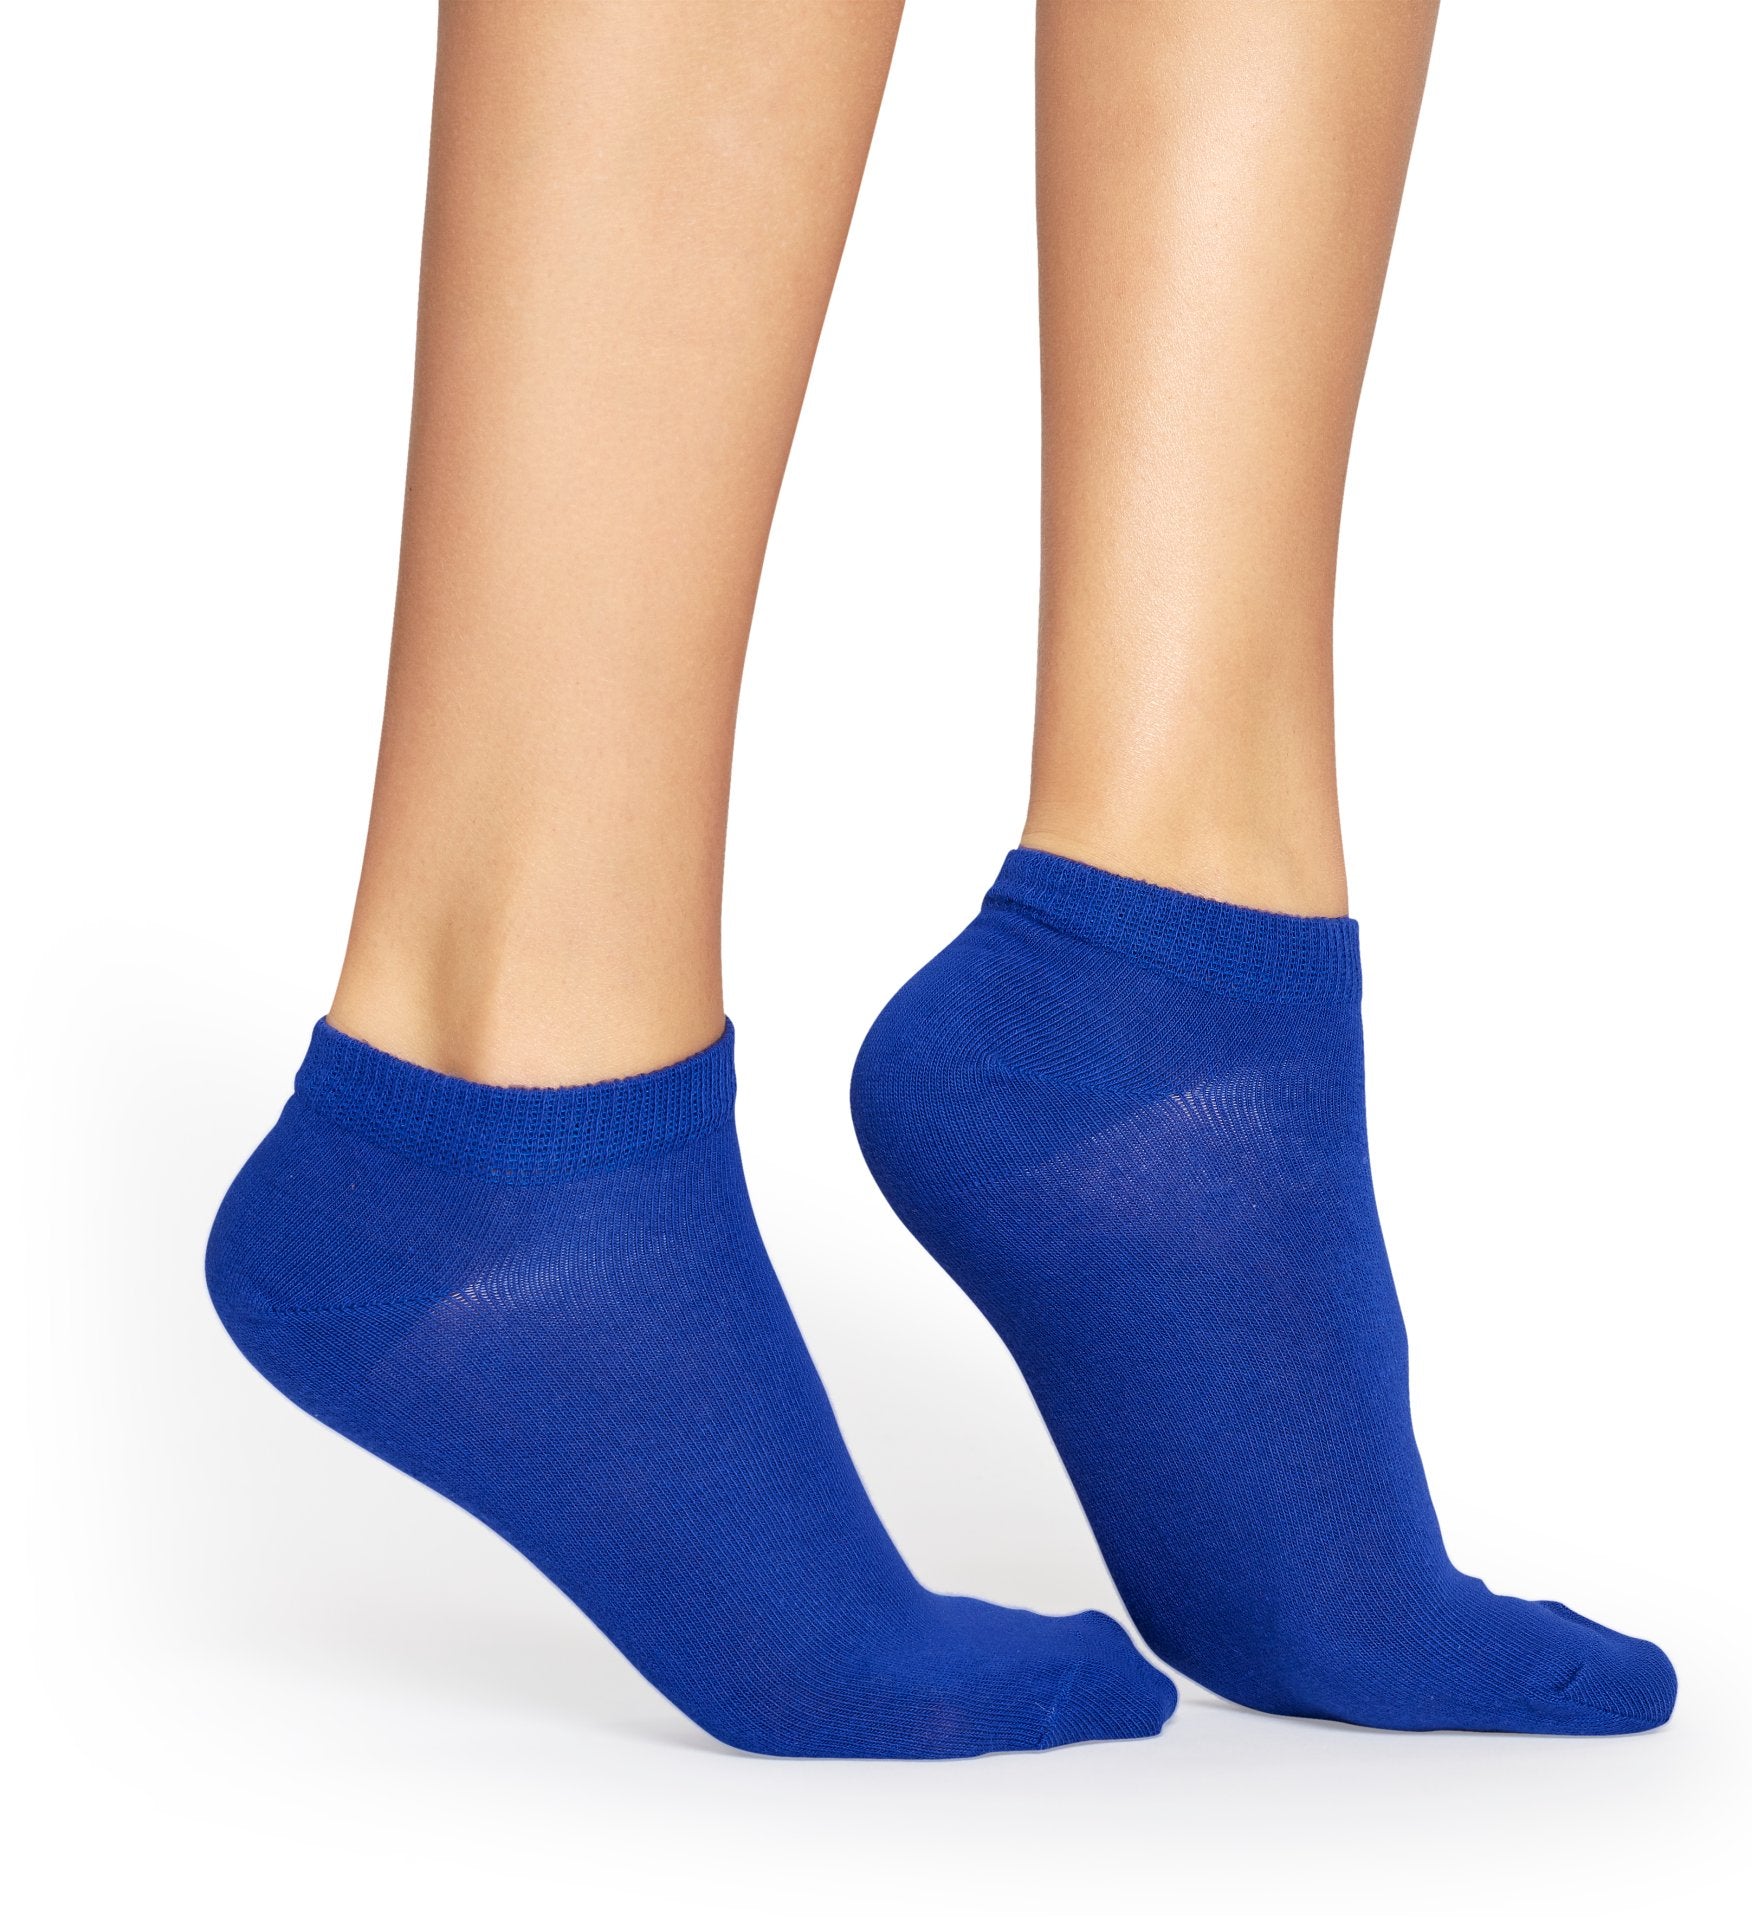 Nízké ponožky Happy Socks, vzor Hamburger (modré) - 2 páry